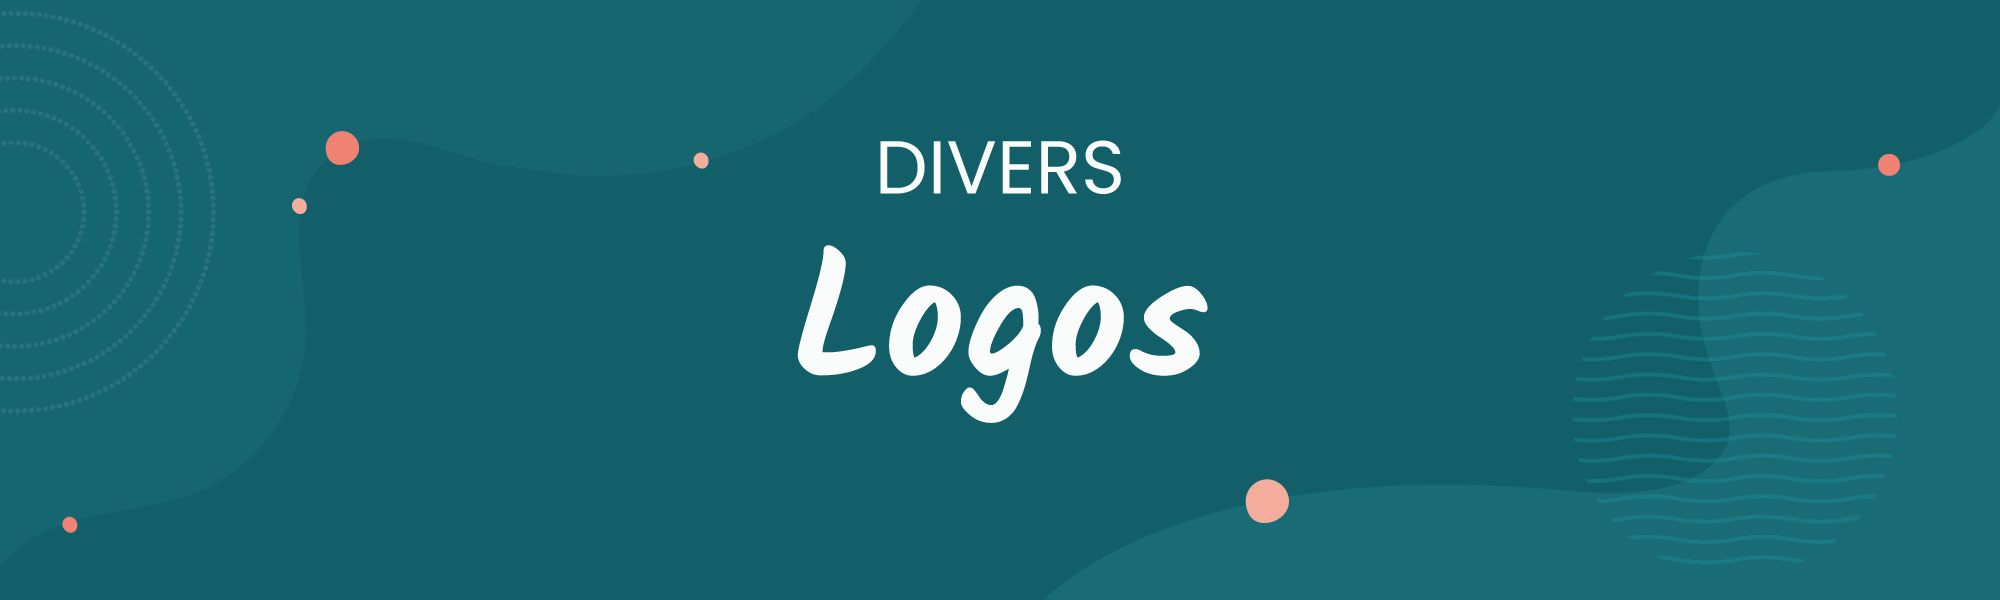 Divers logos